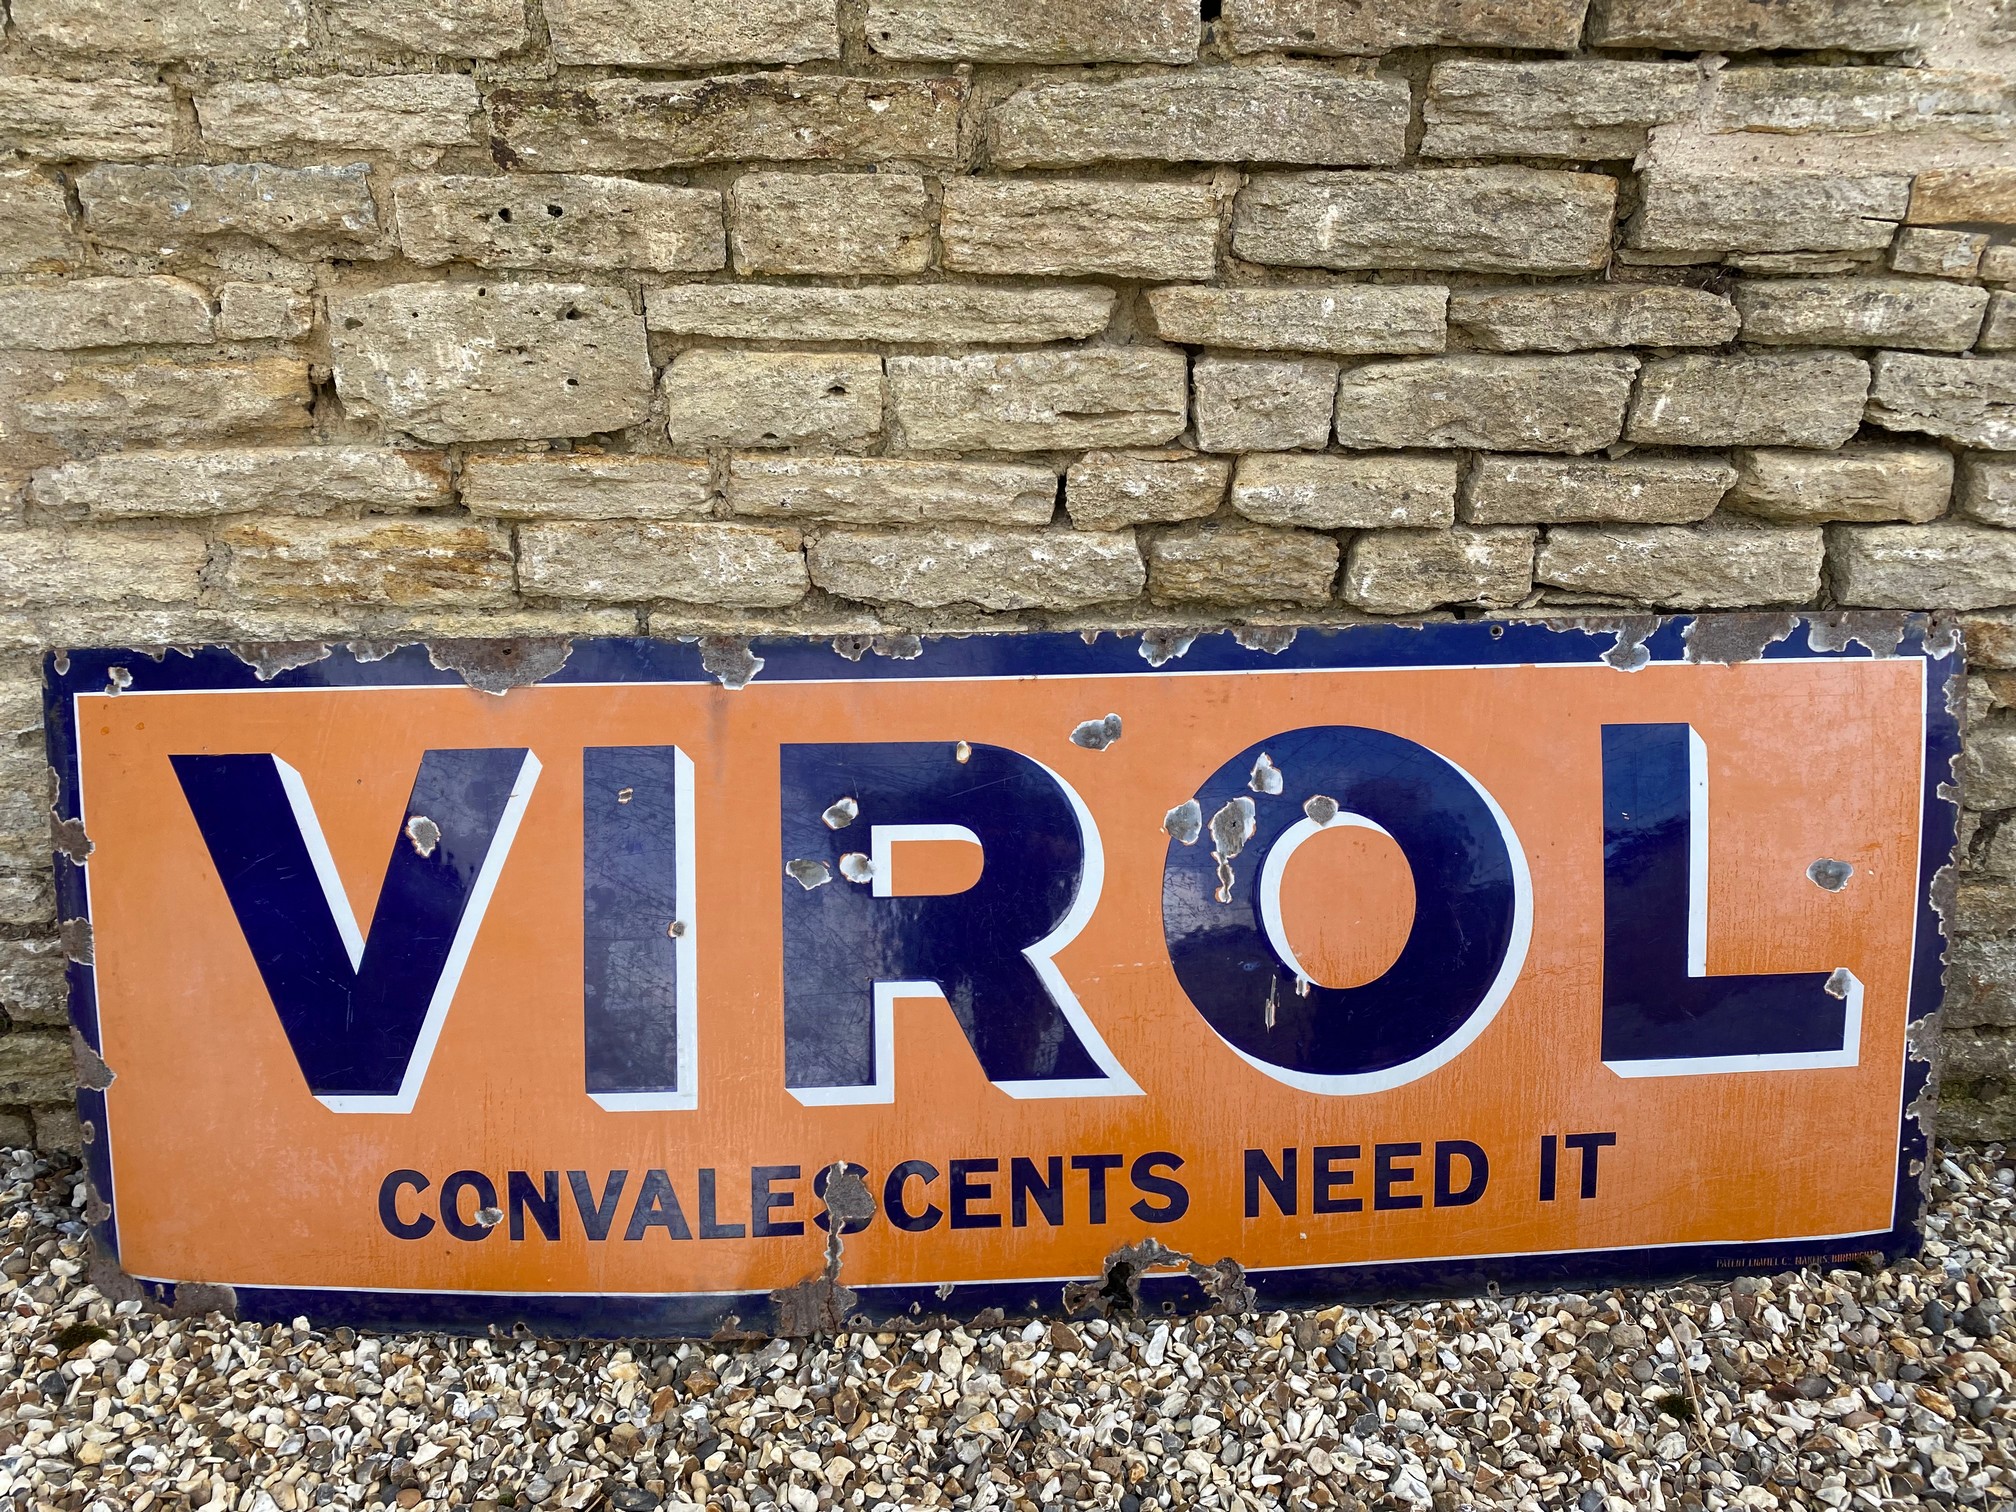 A Virol 'Convalescents Need It' enamel sign, 78 x 28".